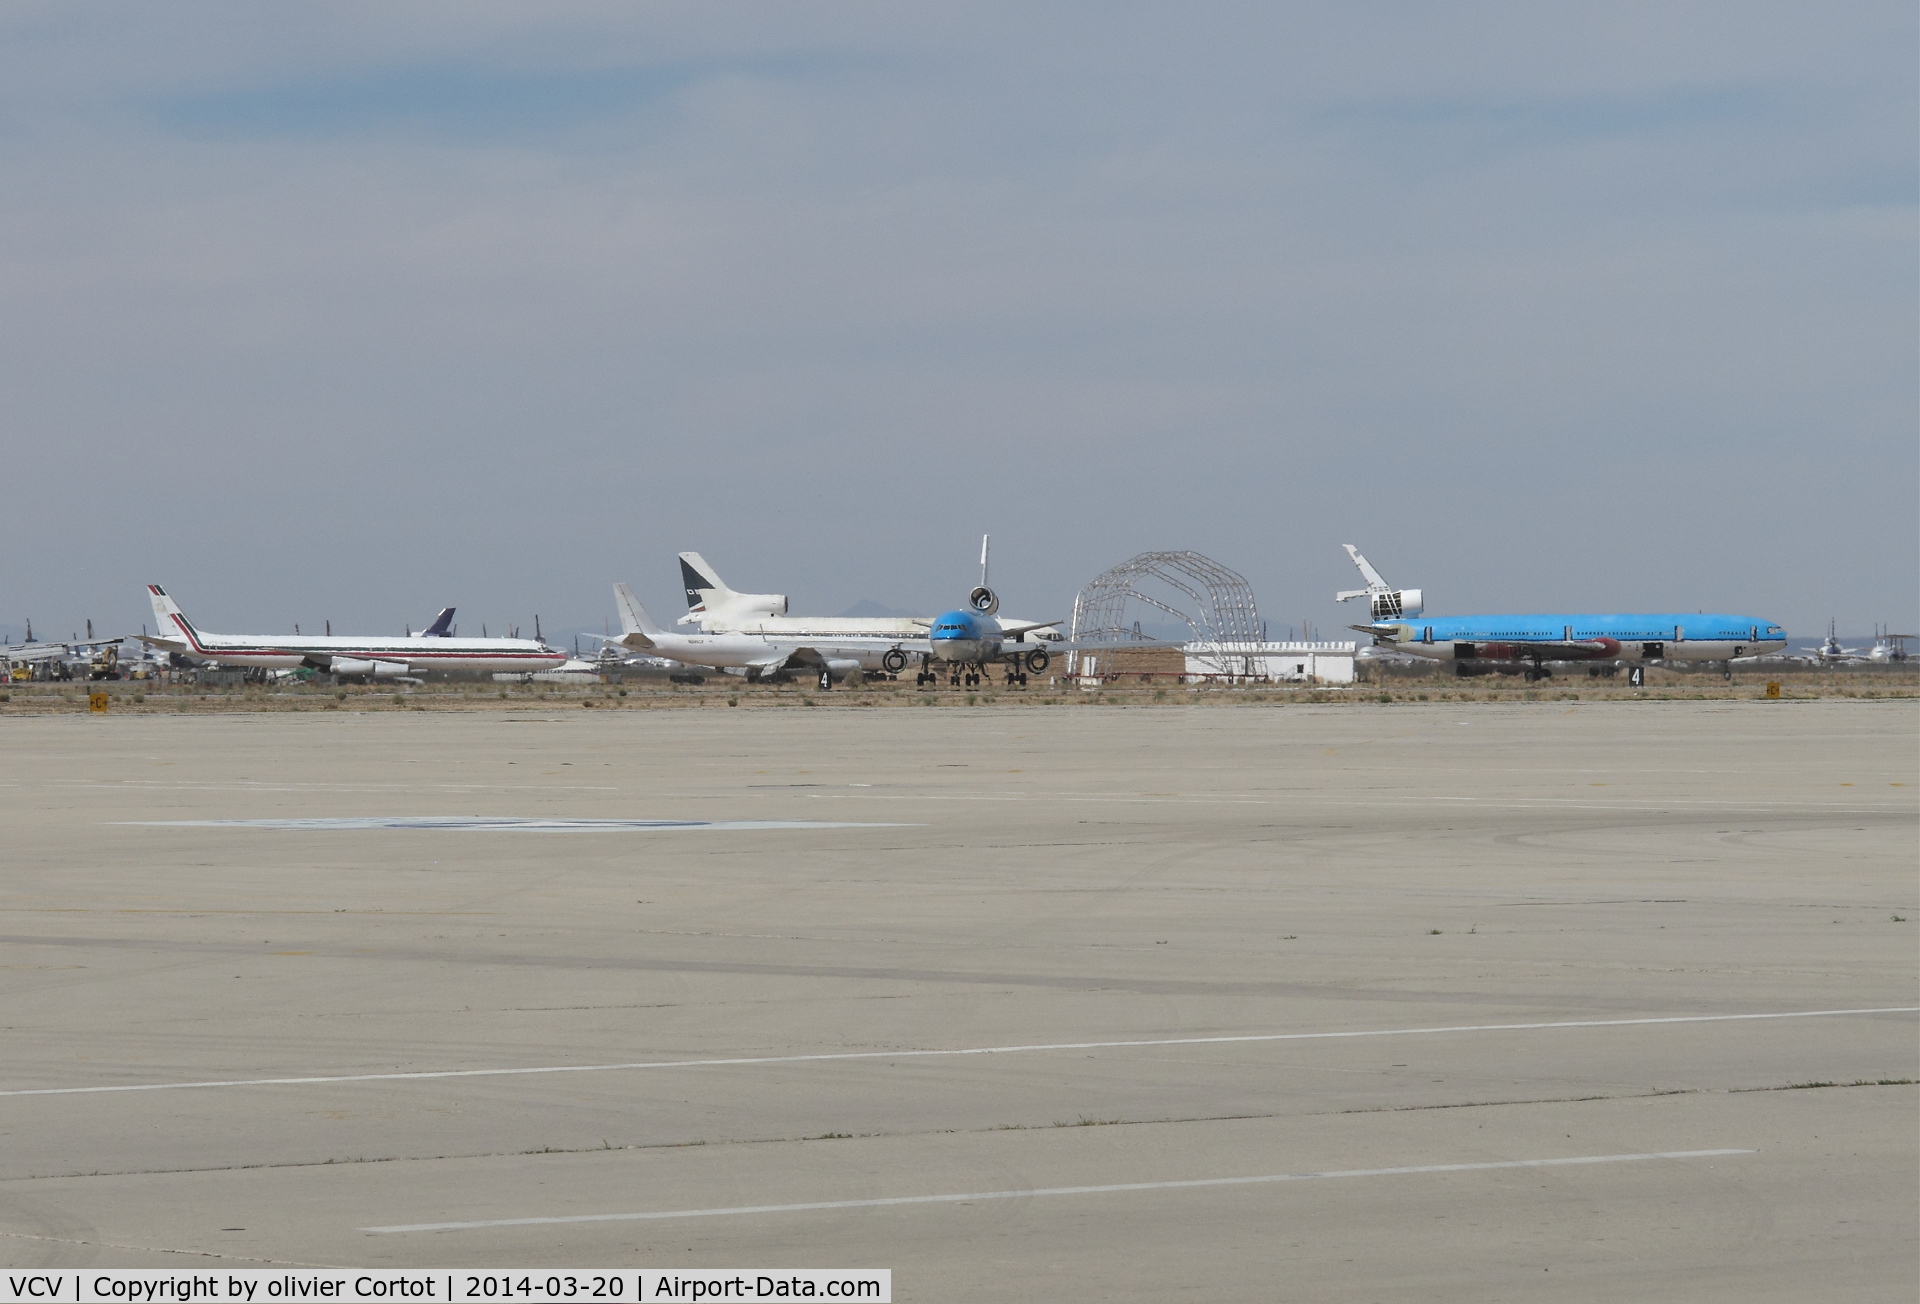 Southern California Logistics Airport (VCV) - also an interesting aircraft cimetery